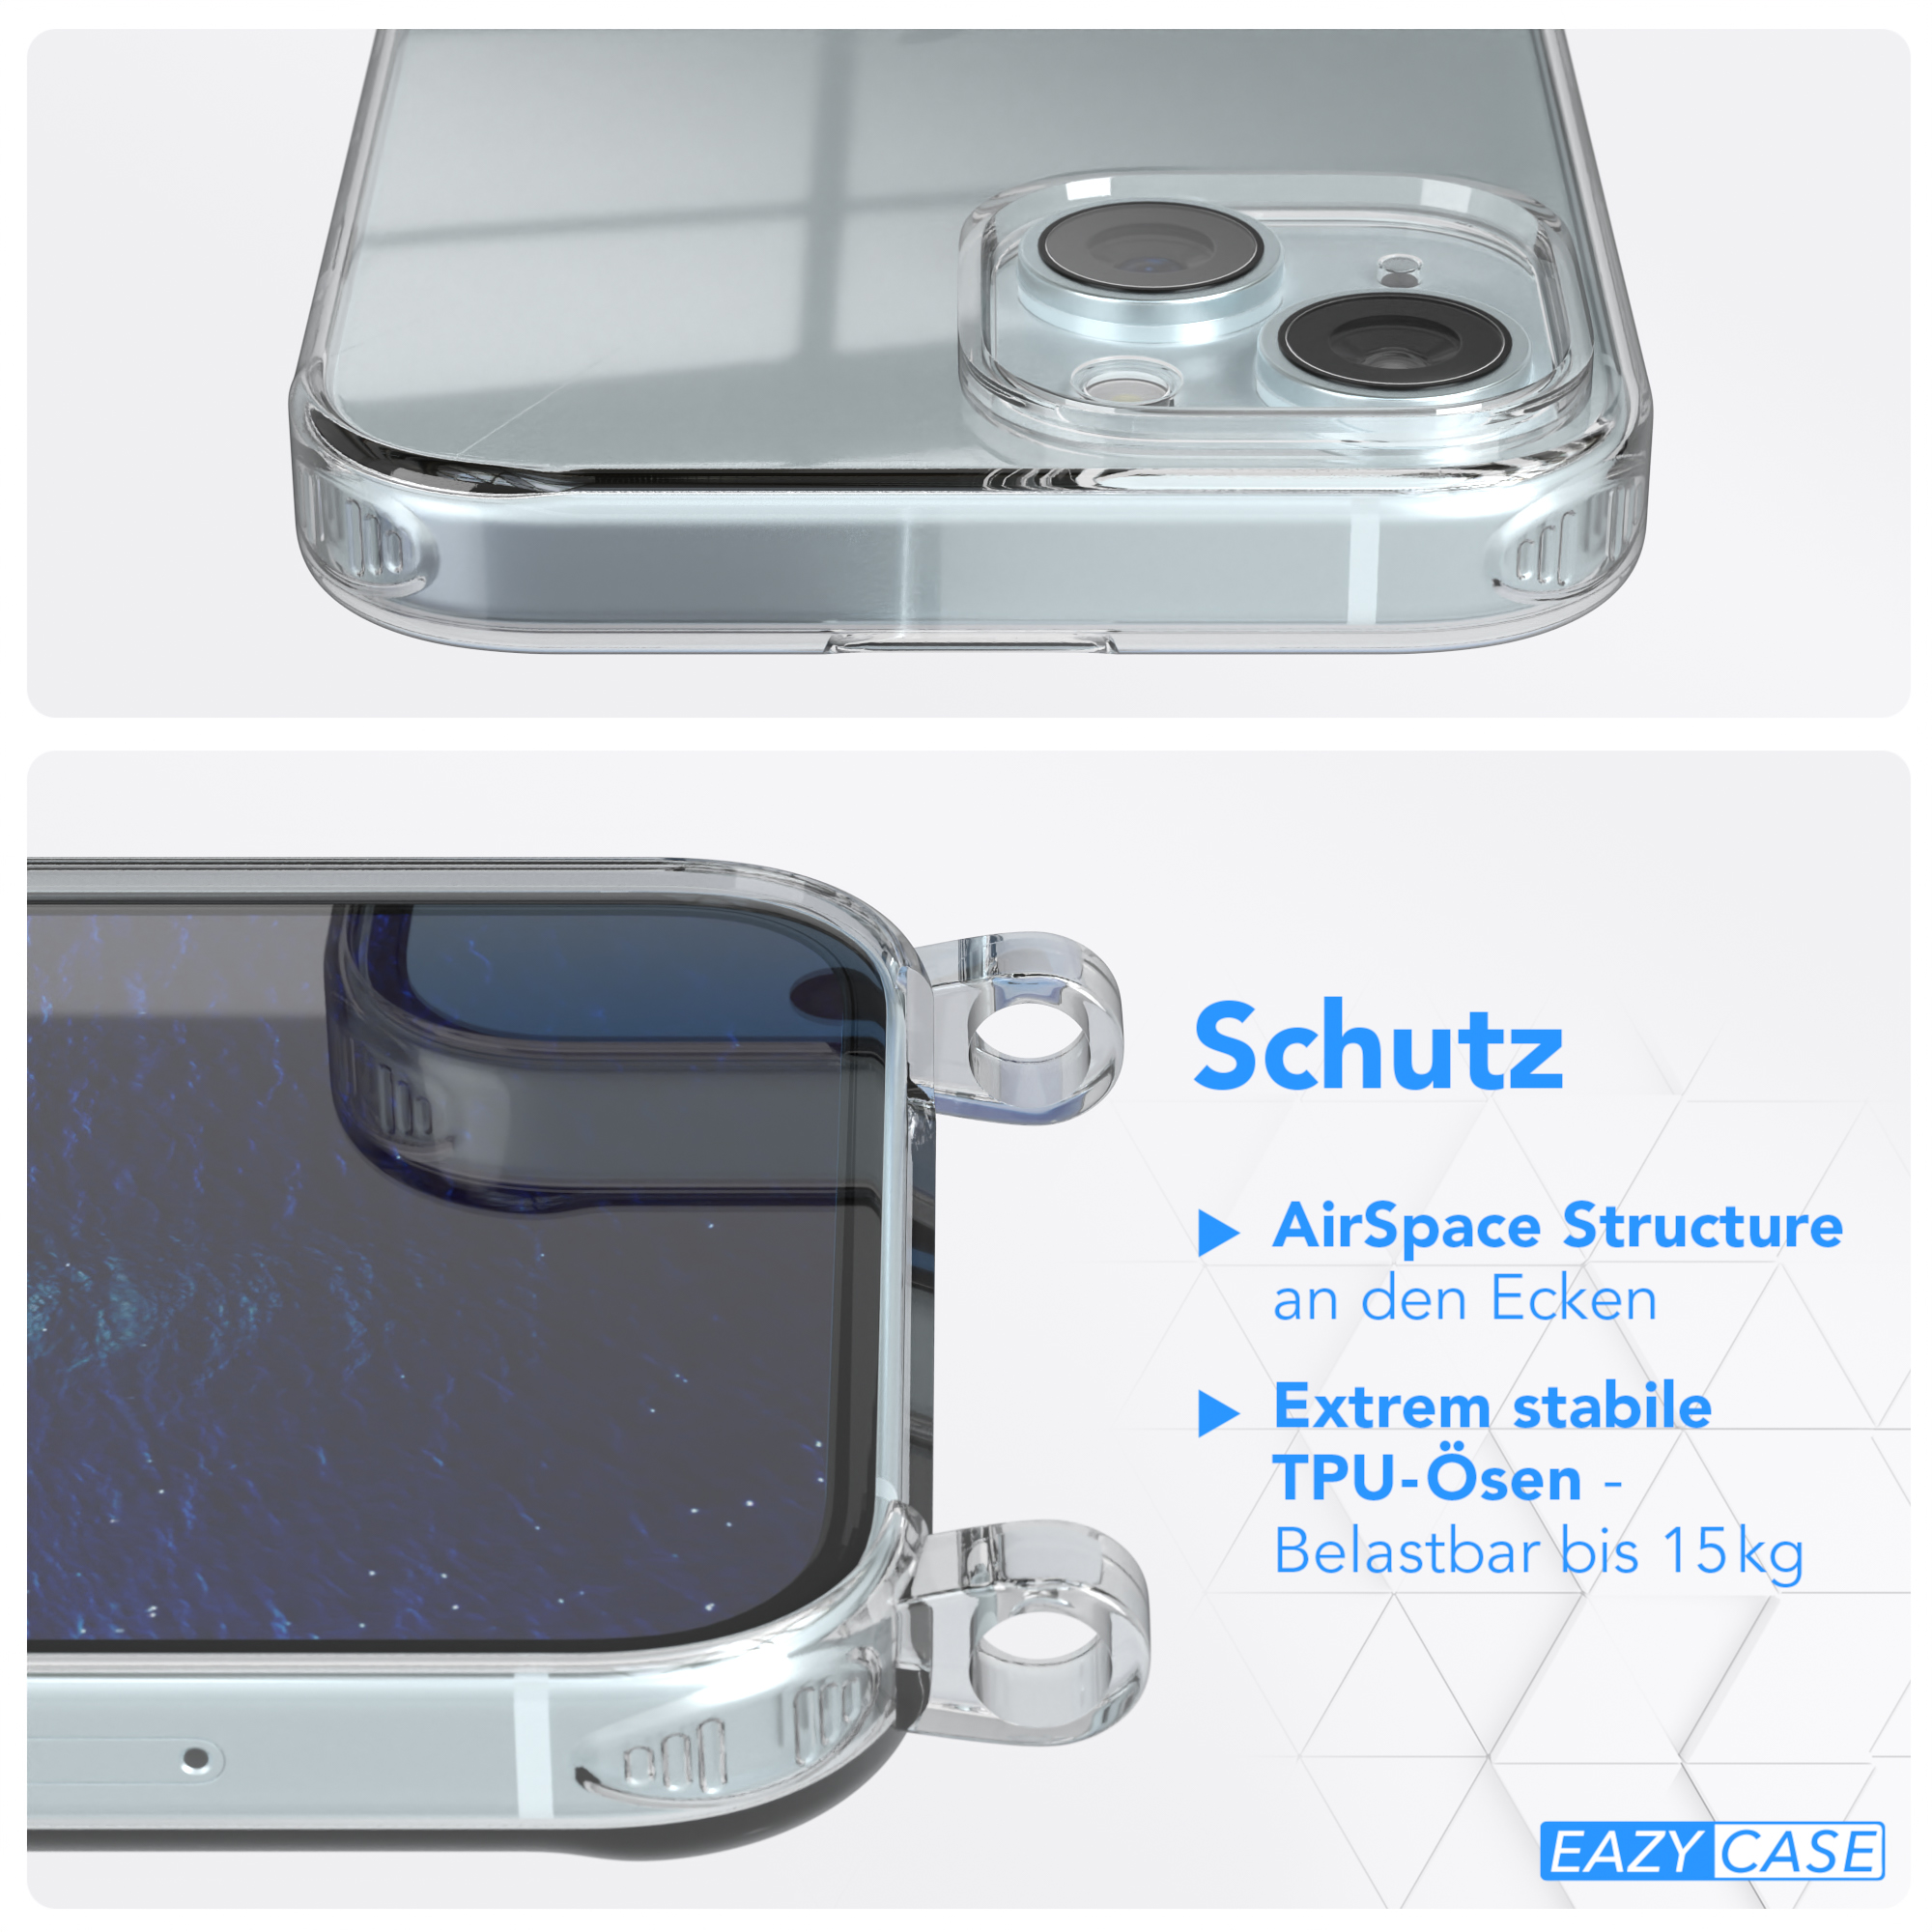 Umhängetasche, mit Cover Clips / Silber CASE Apple, Blau iPhone Clear 15, EAZY Umhängeband,